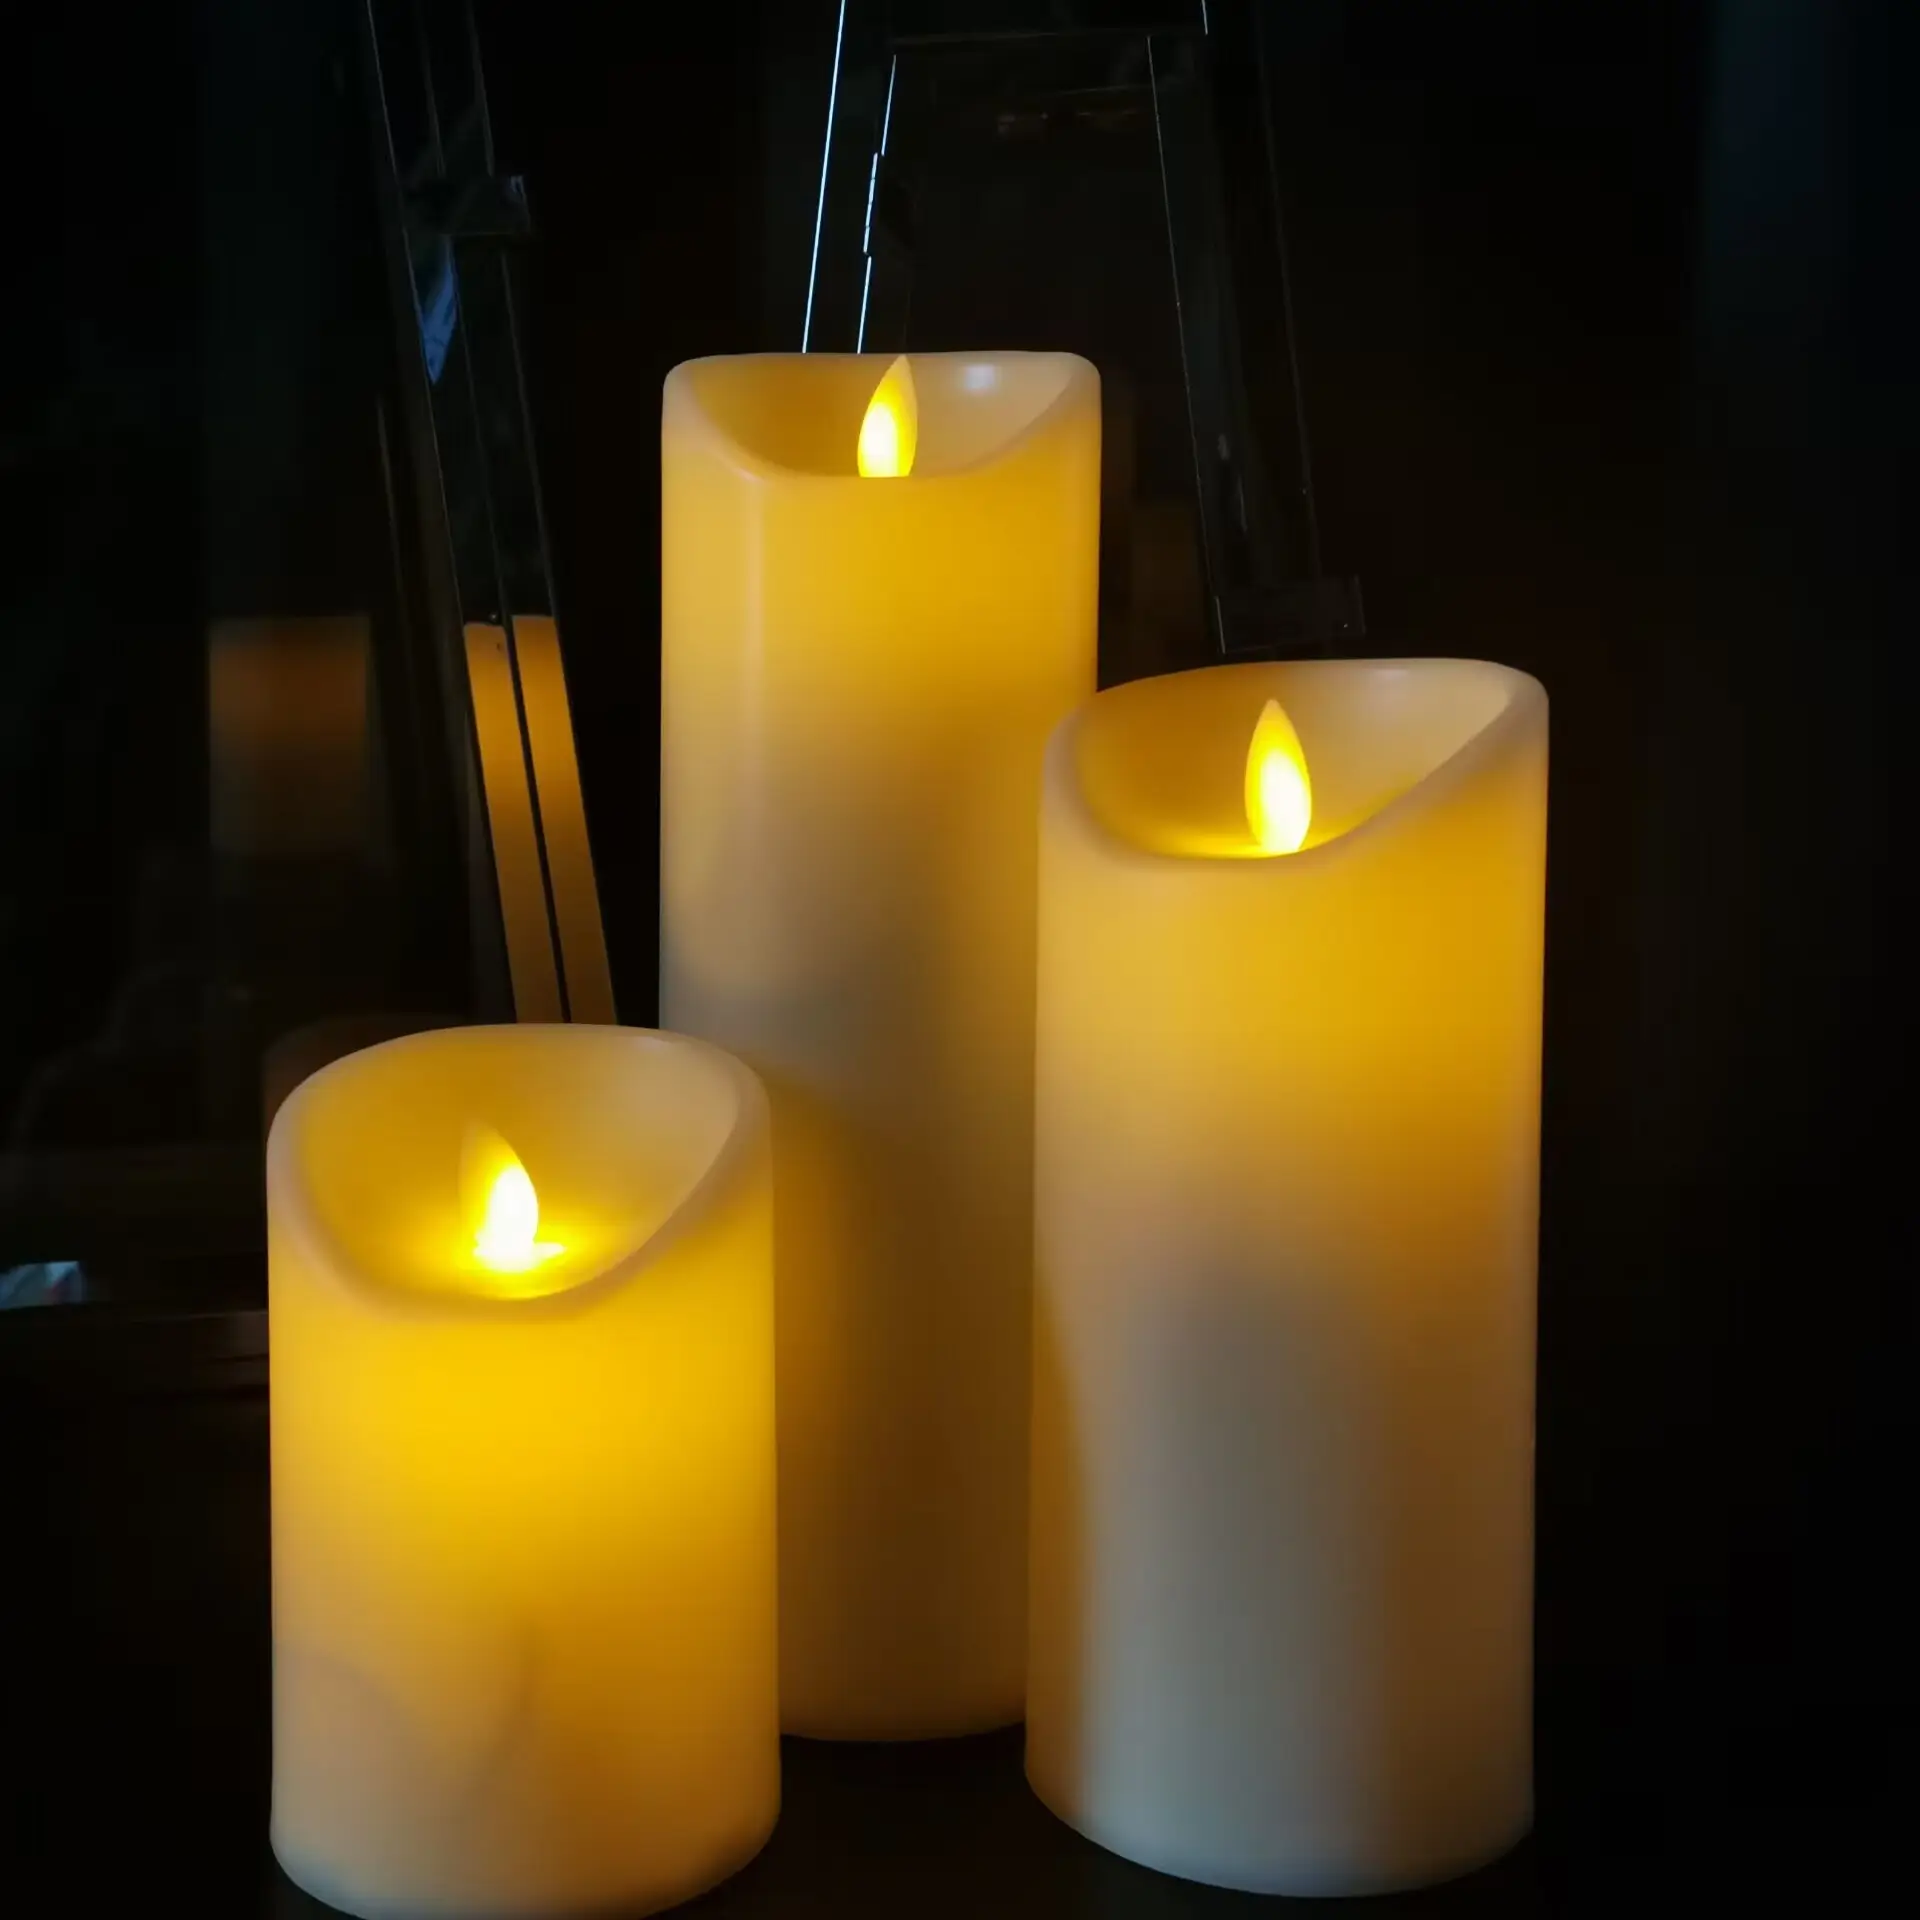 Dimensioni personalizzabili Led Candle Light Moving Flame Candle Set compleanno Holiday candele Decorative a Led artificiali con telecomando